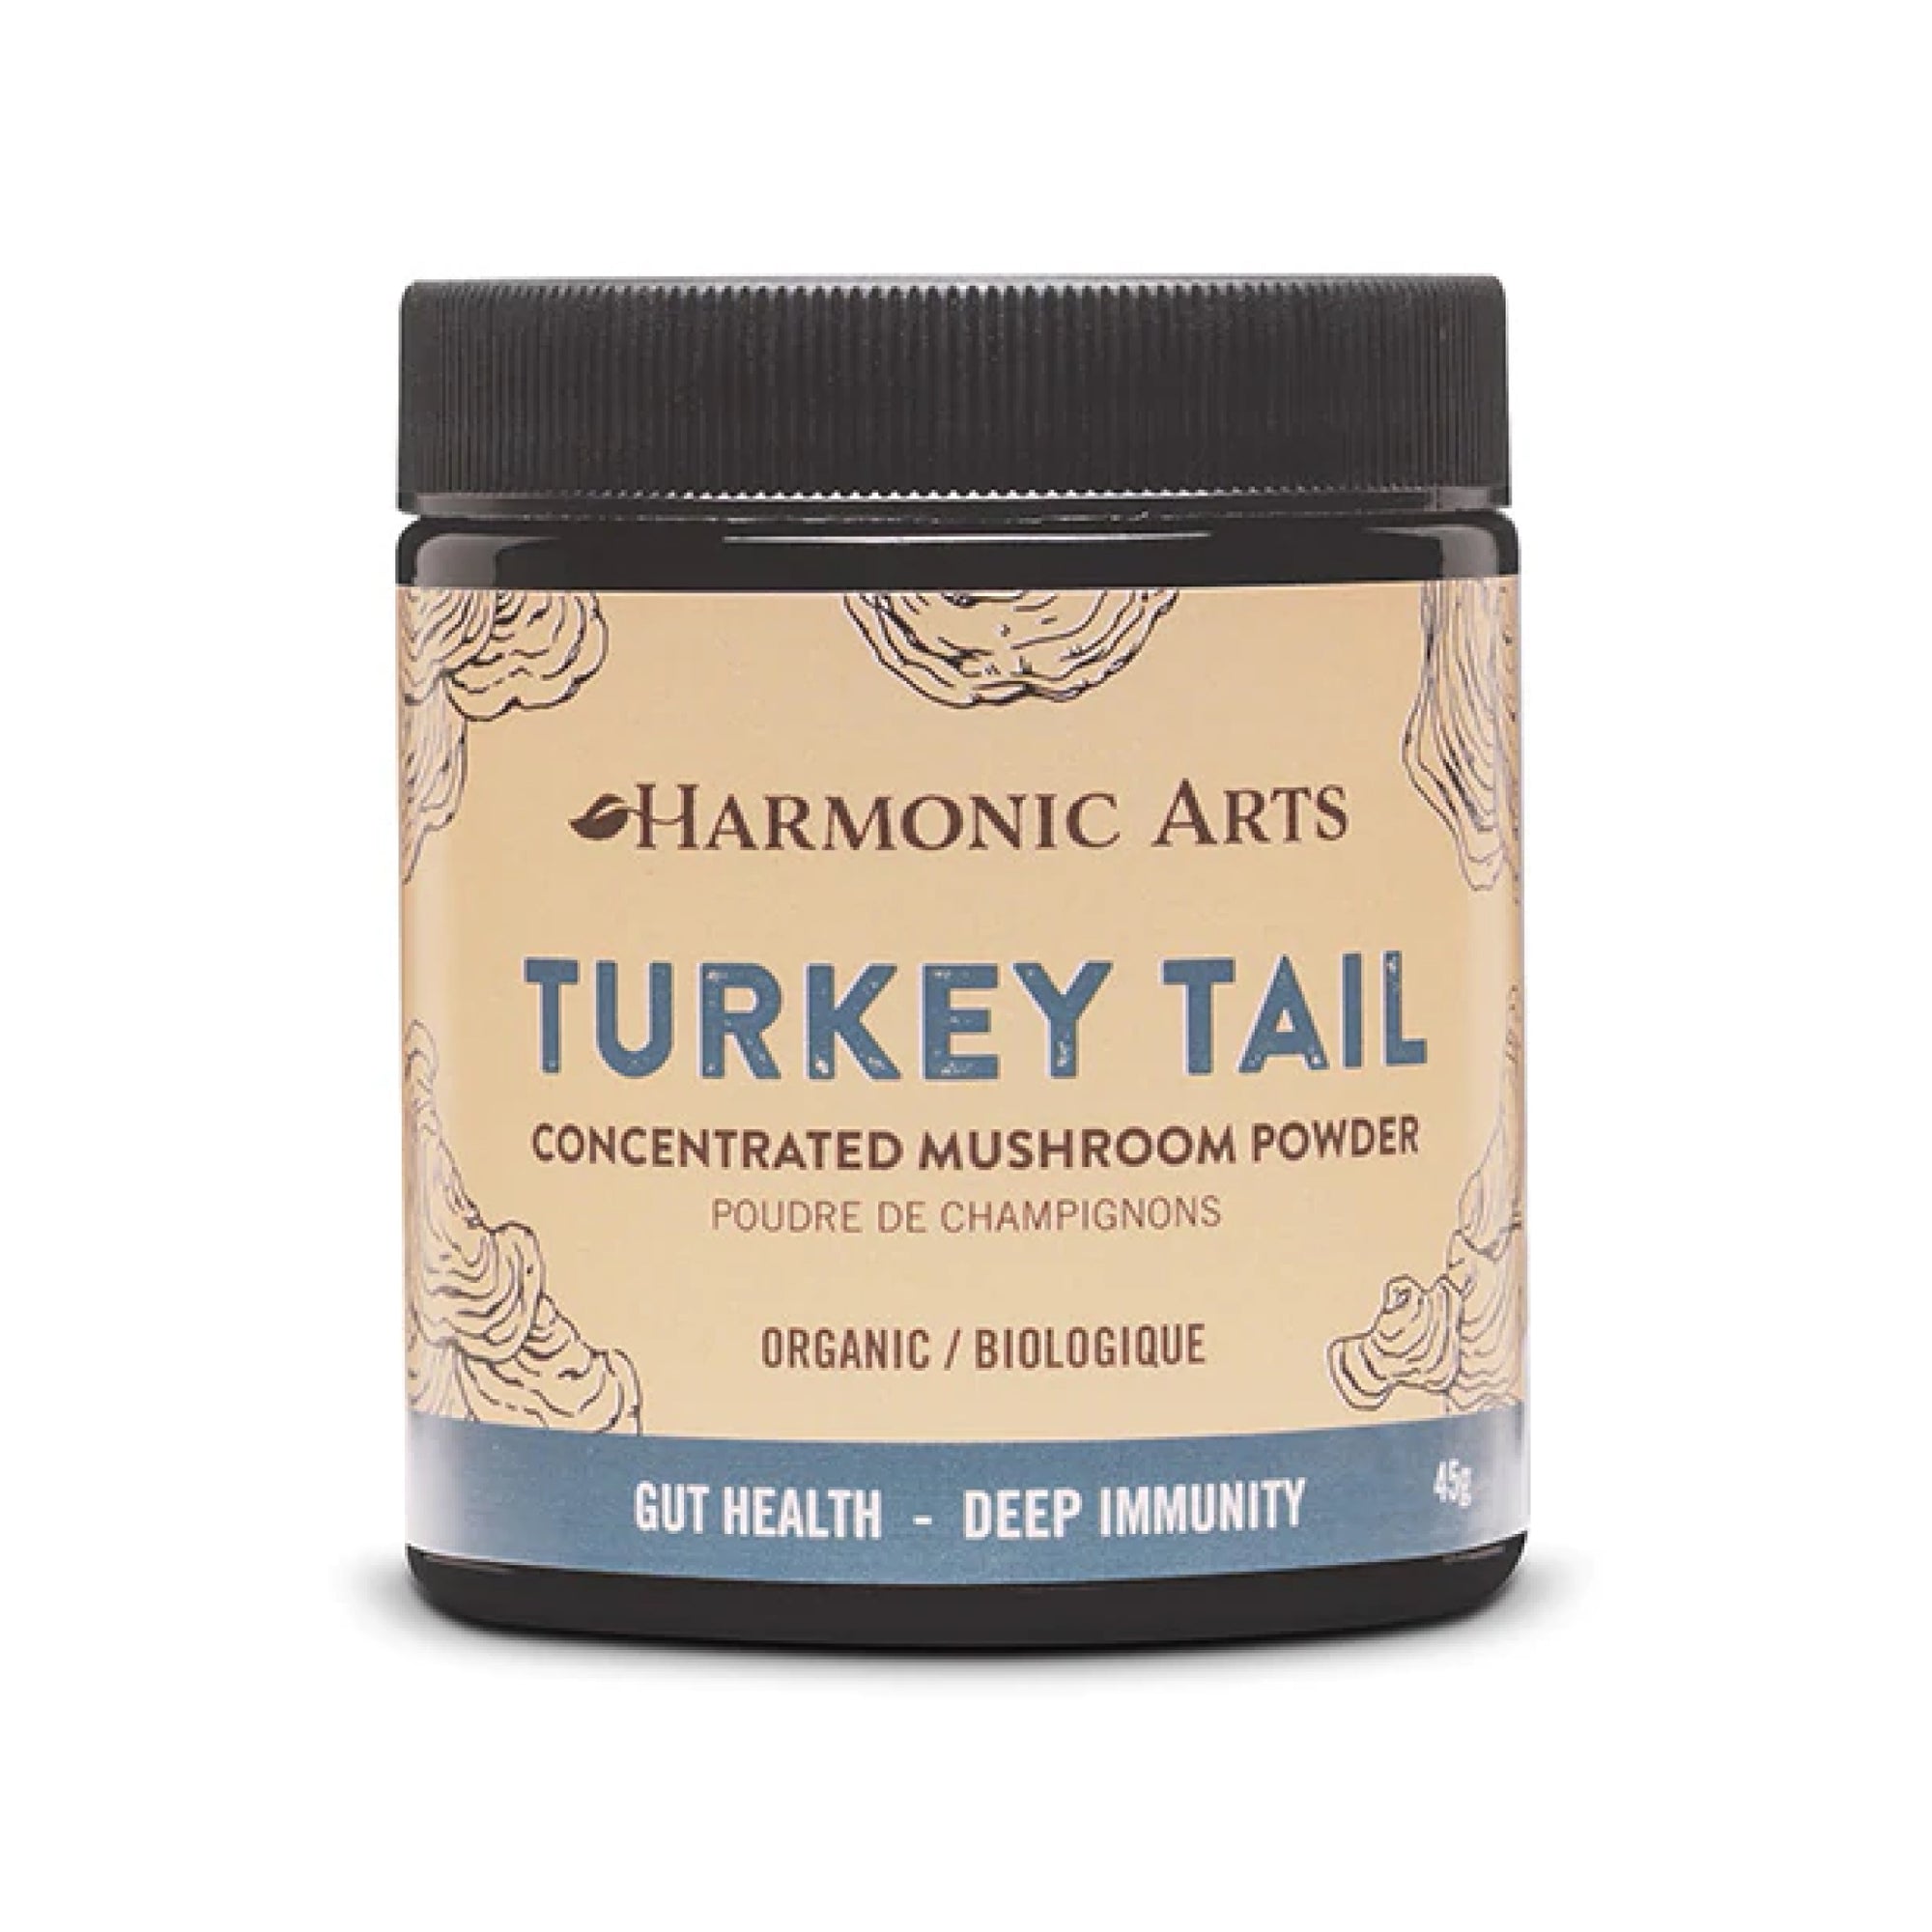 Harmonic Arts Organic Turkey Tail Concentrated Mushroom Powder 45g